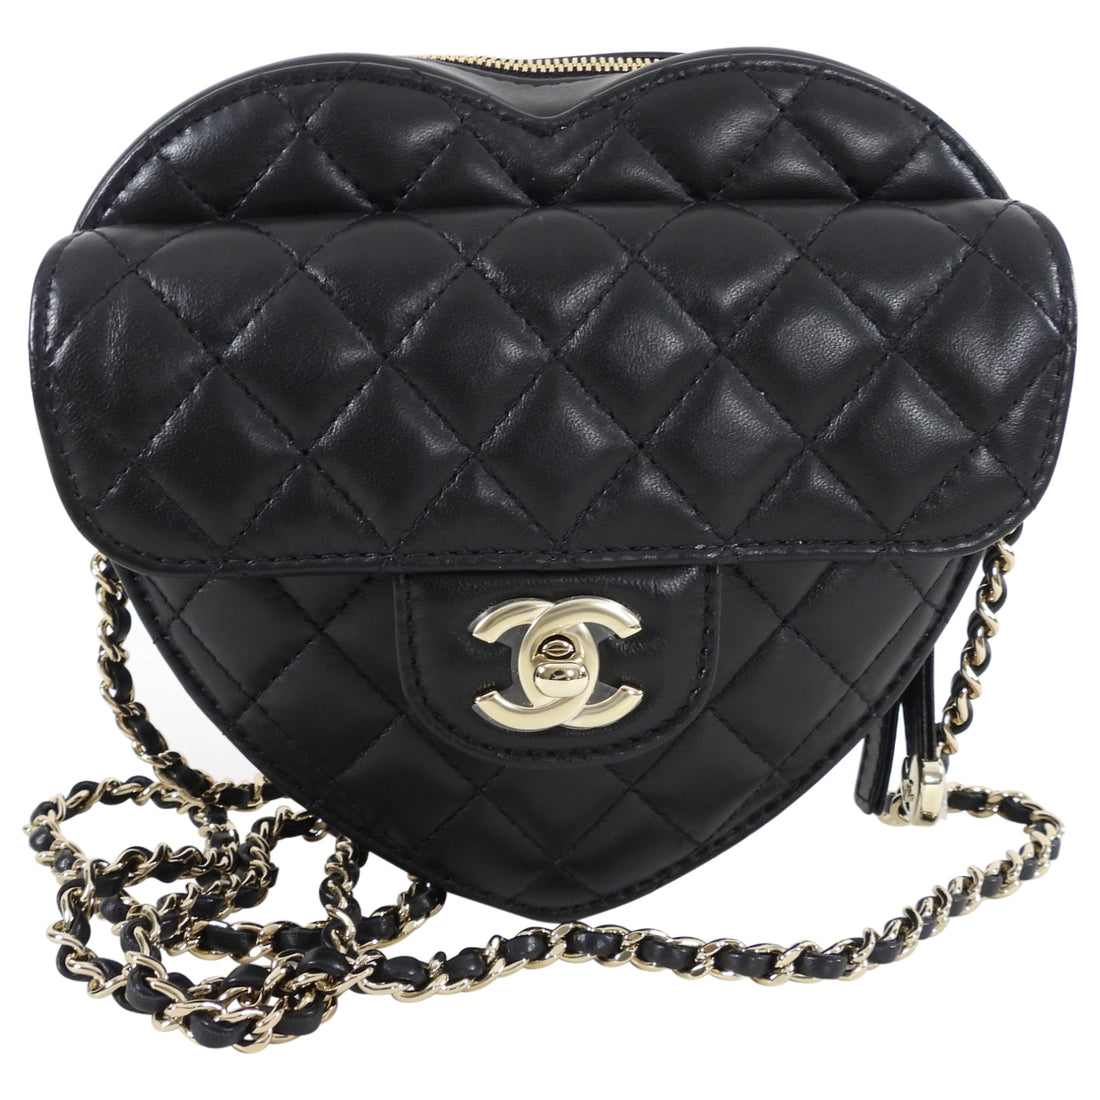 CHANEL, Bags, Large Black Chanel Heart Bag